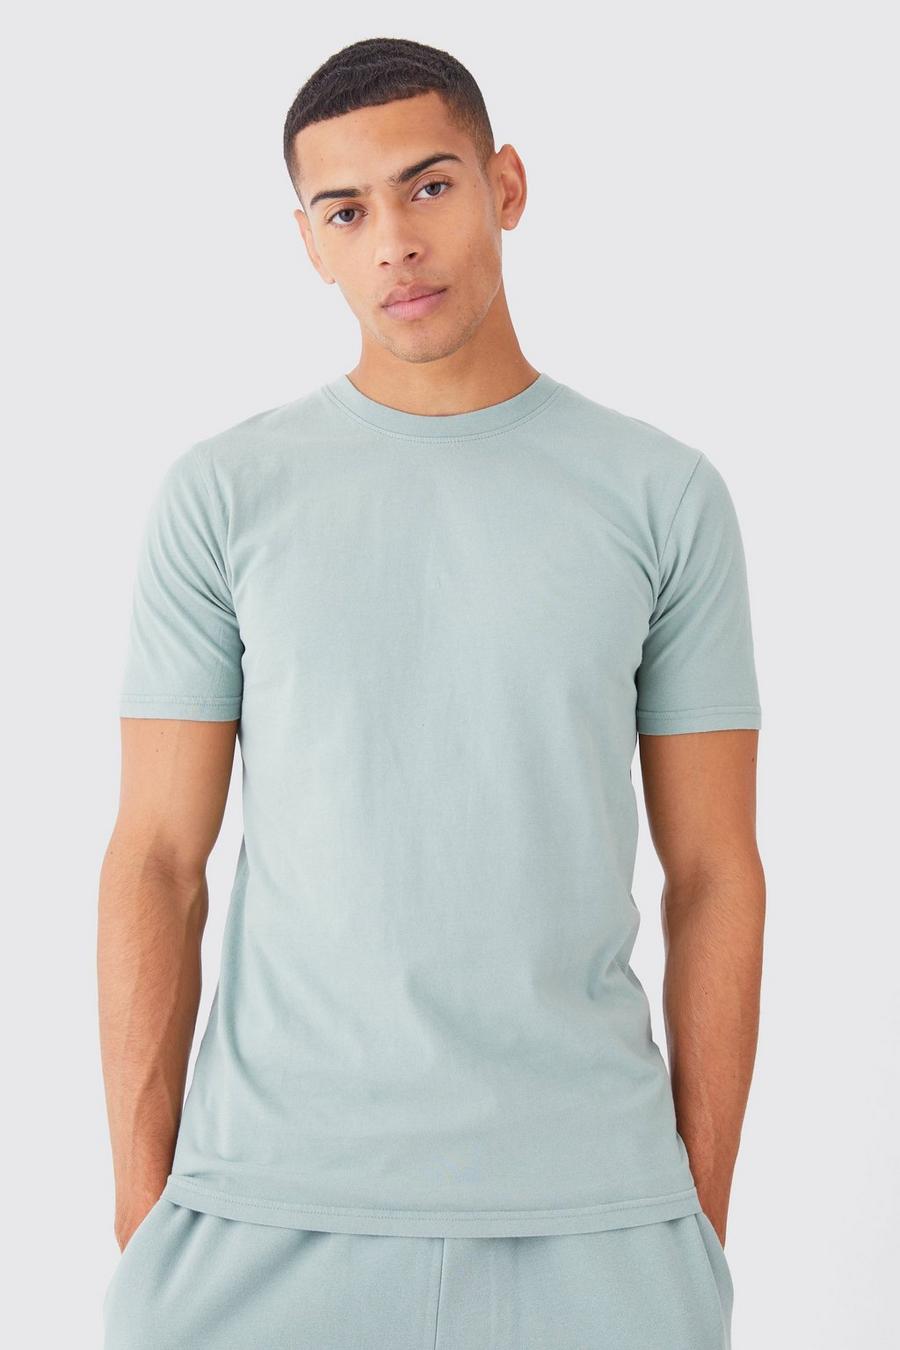 Sage green rayon plaid ls shirt